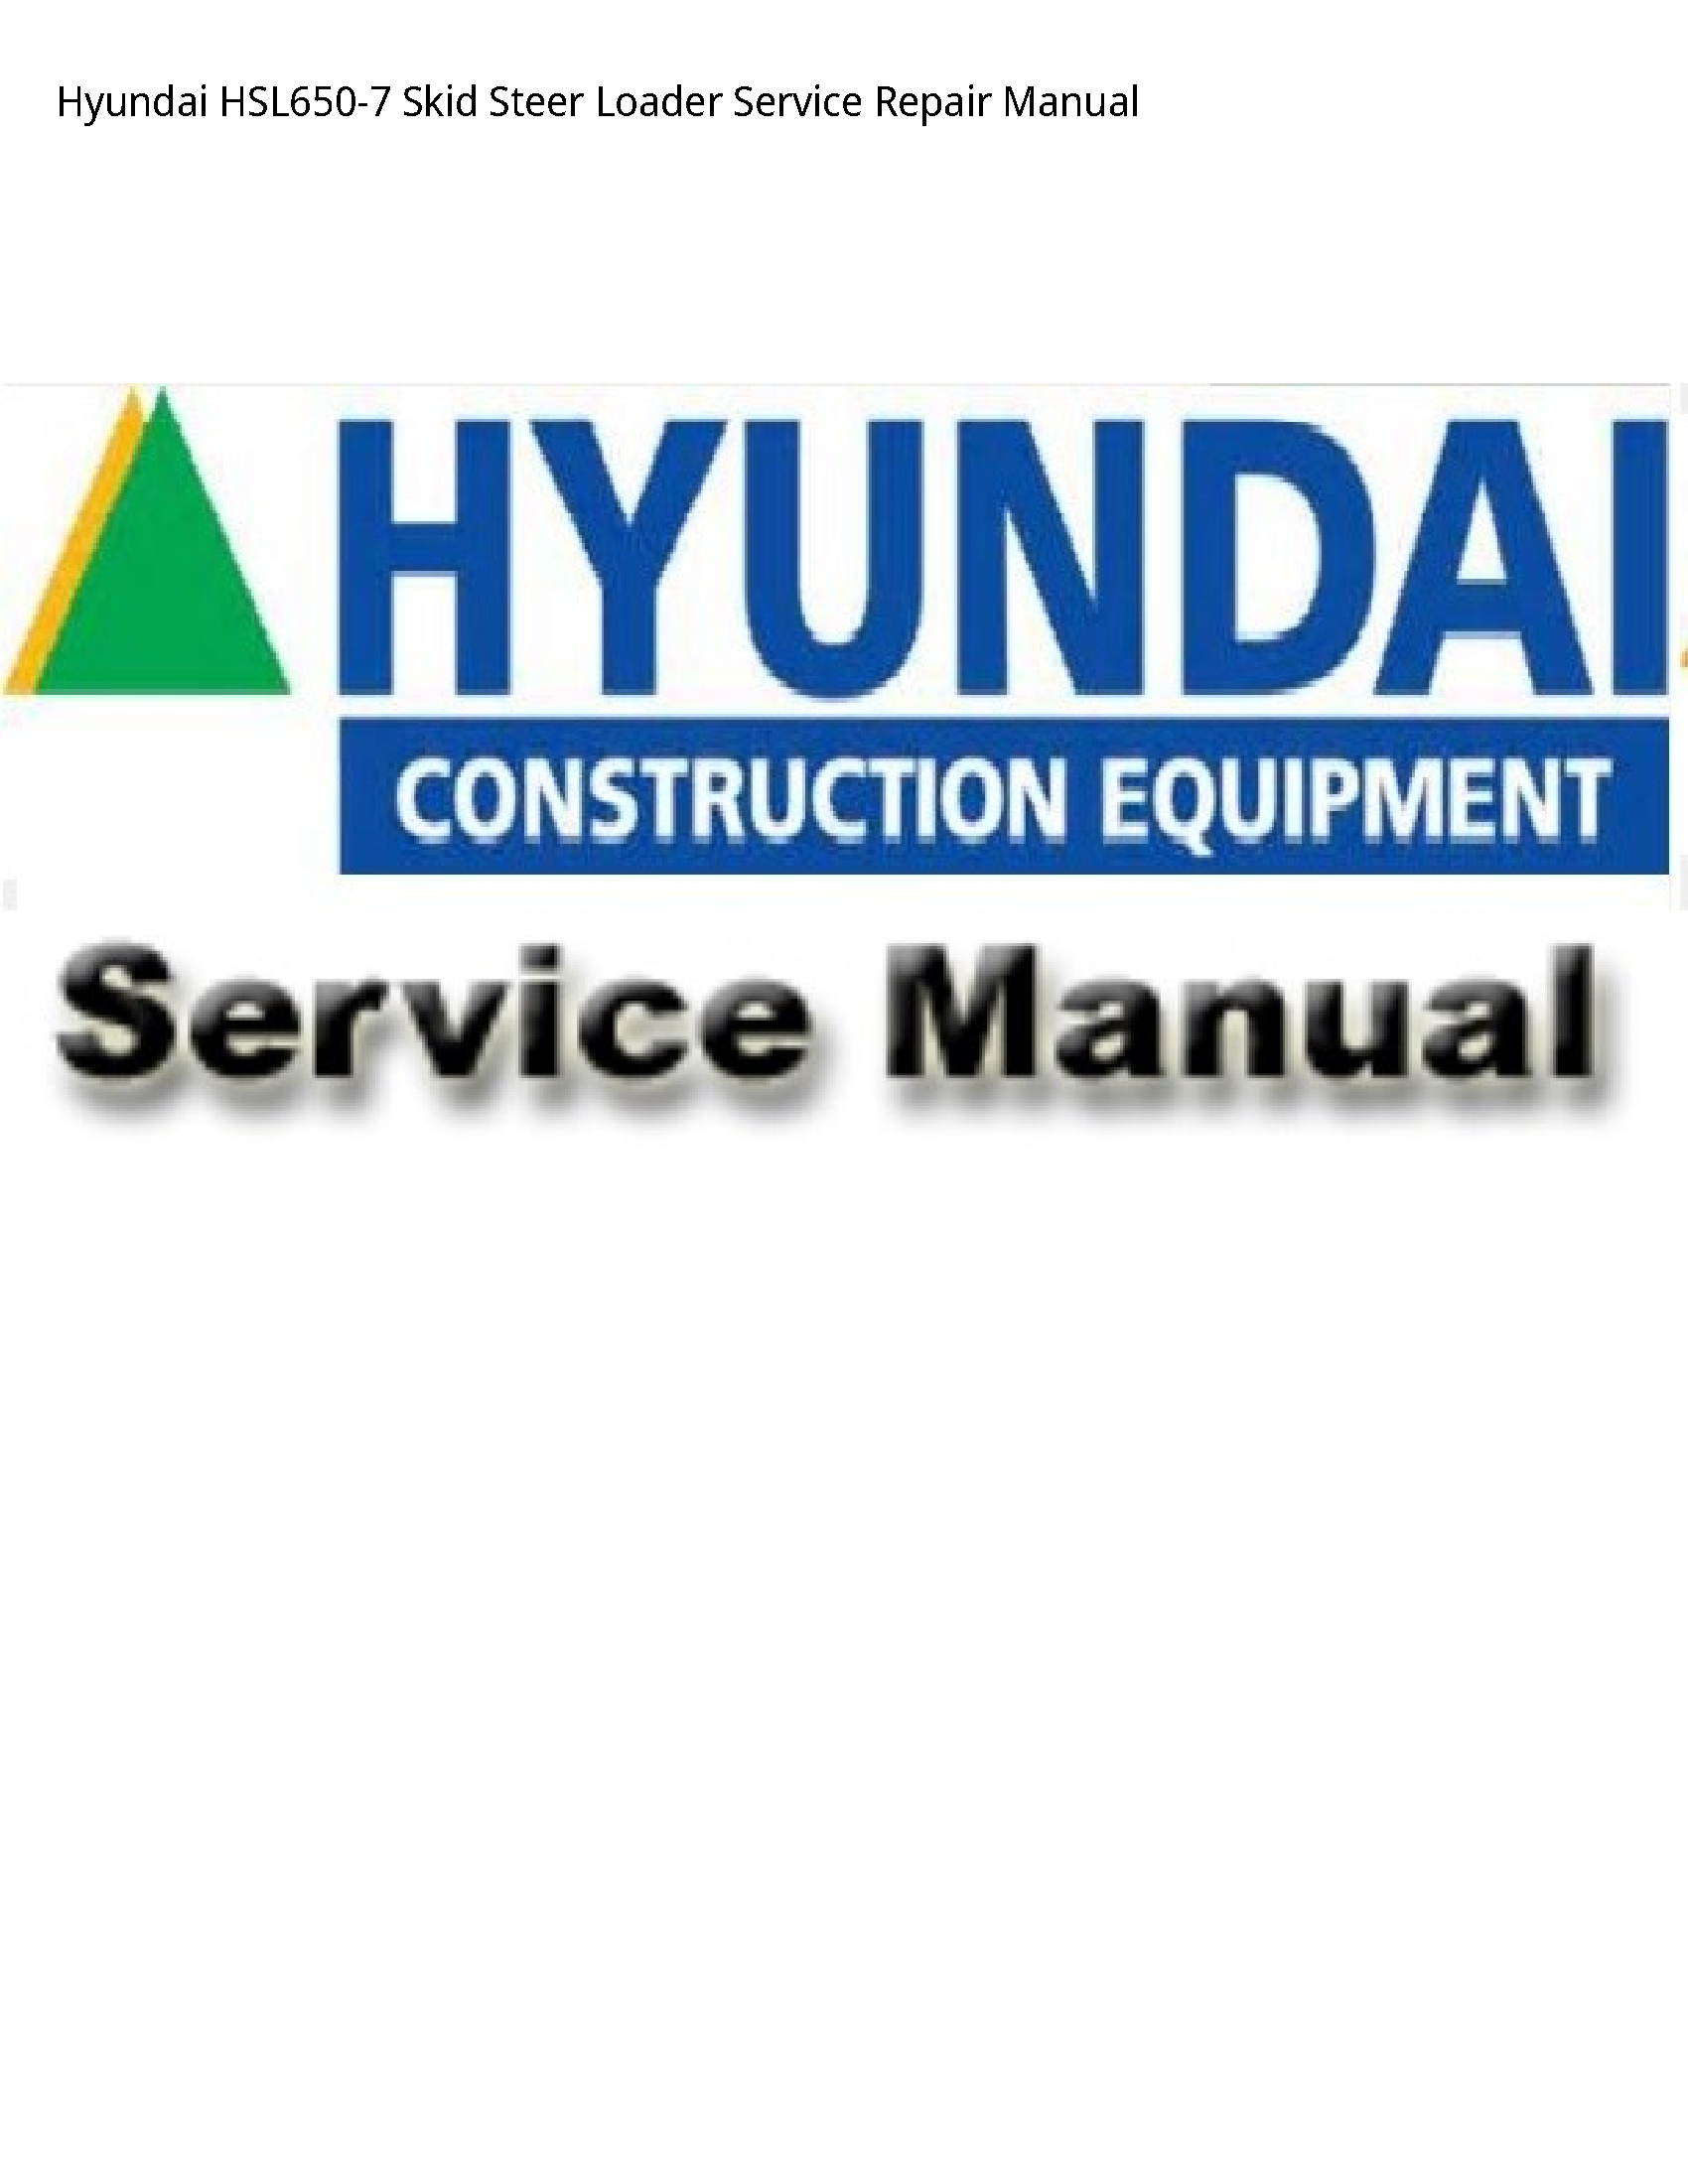 Hyundai HSL650-7 Skid Steer Loader manual